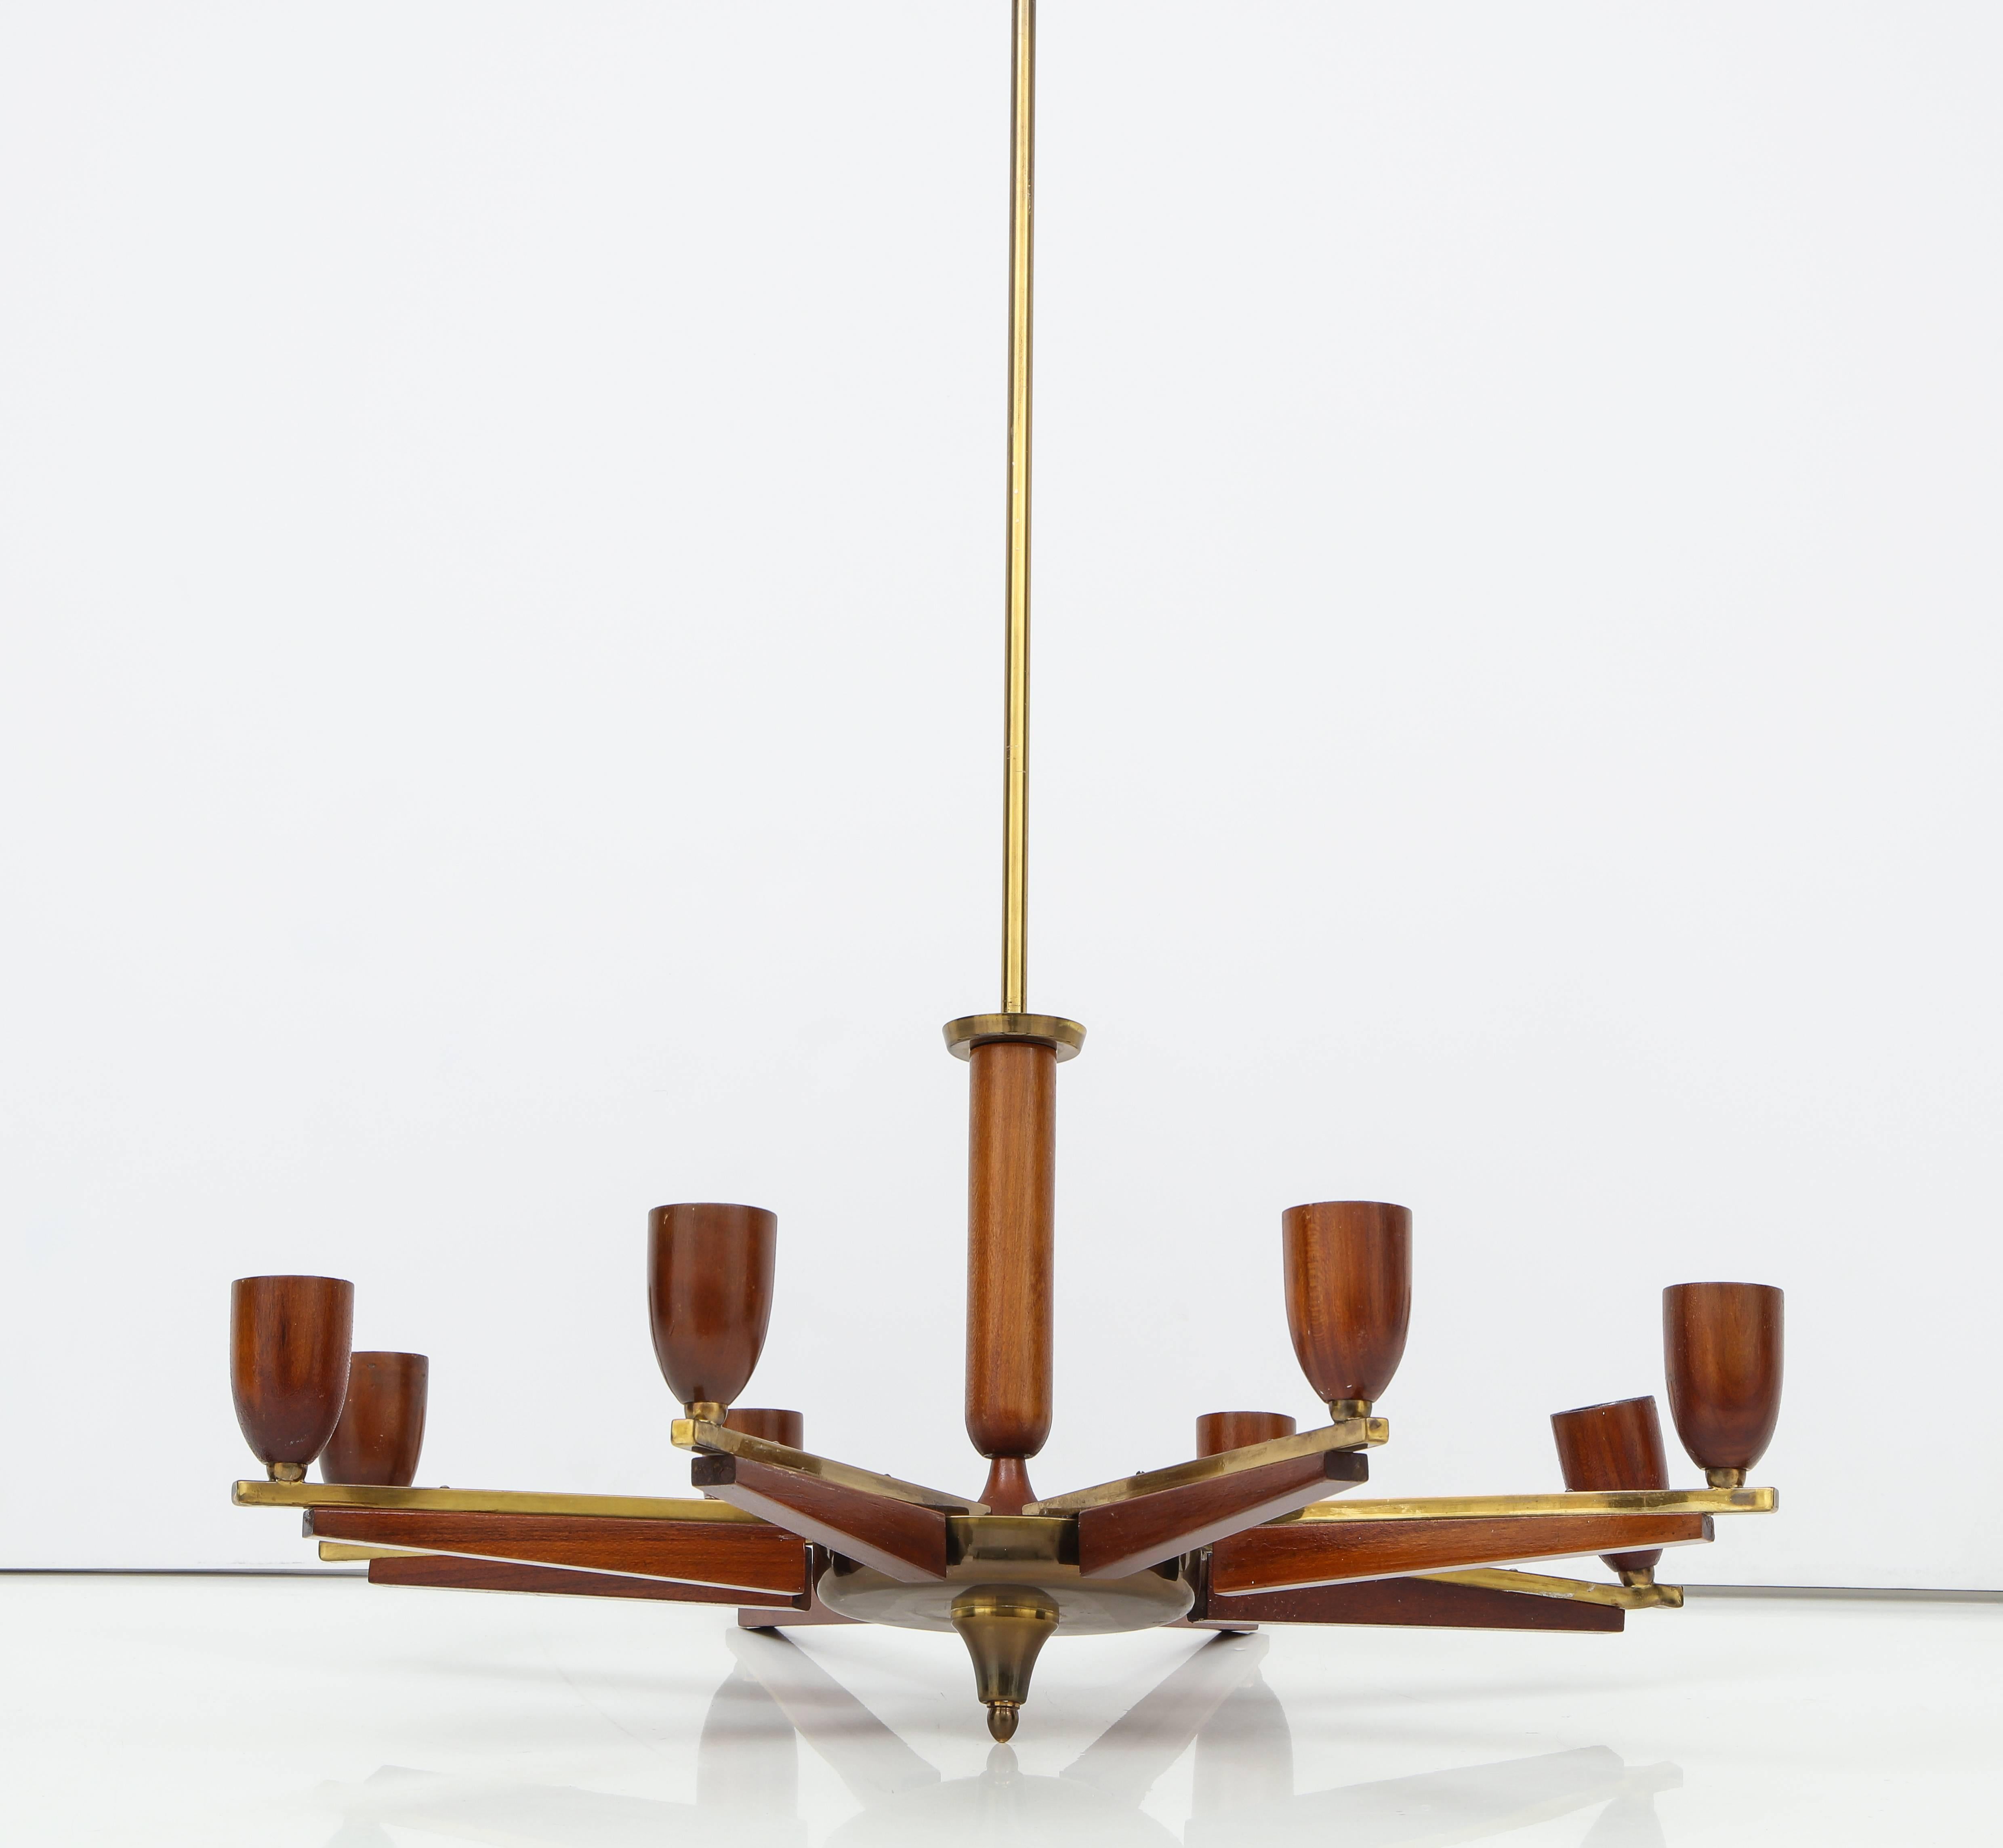 An elegant modernist Italian walnut and brass six-arm chandelier
Italy, circa 1960.
Size: 33